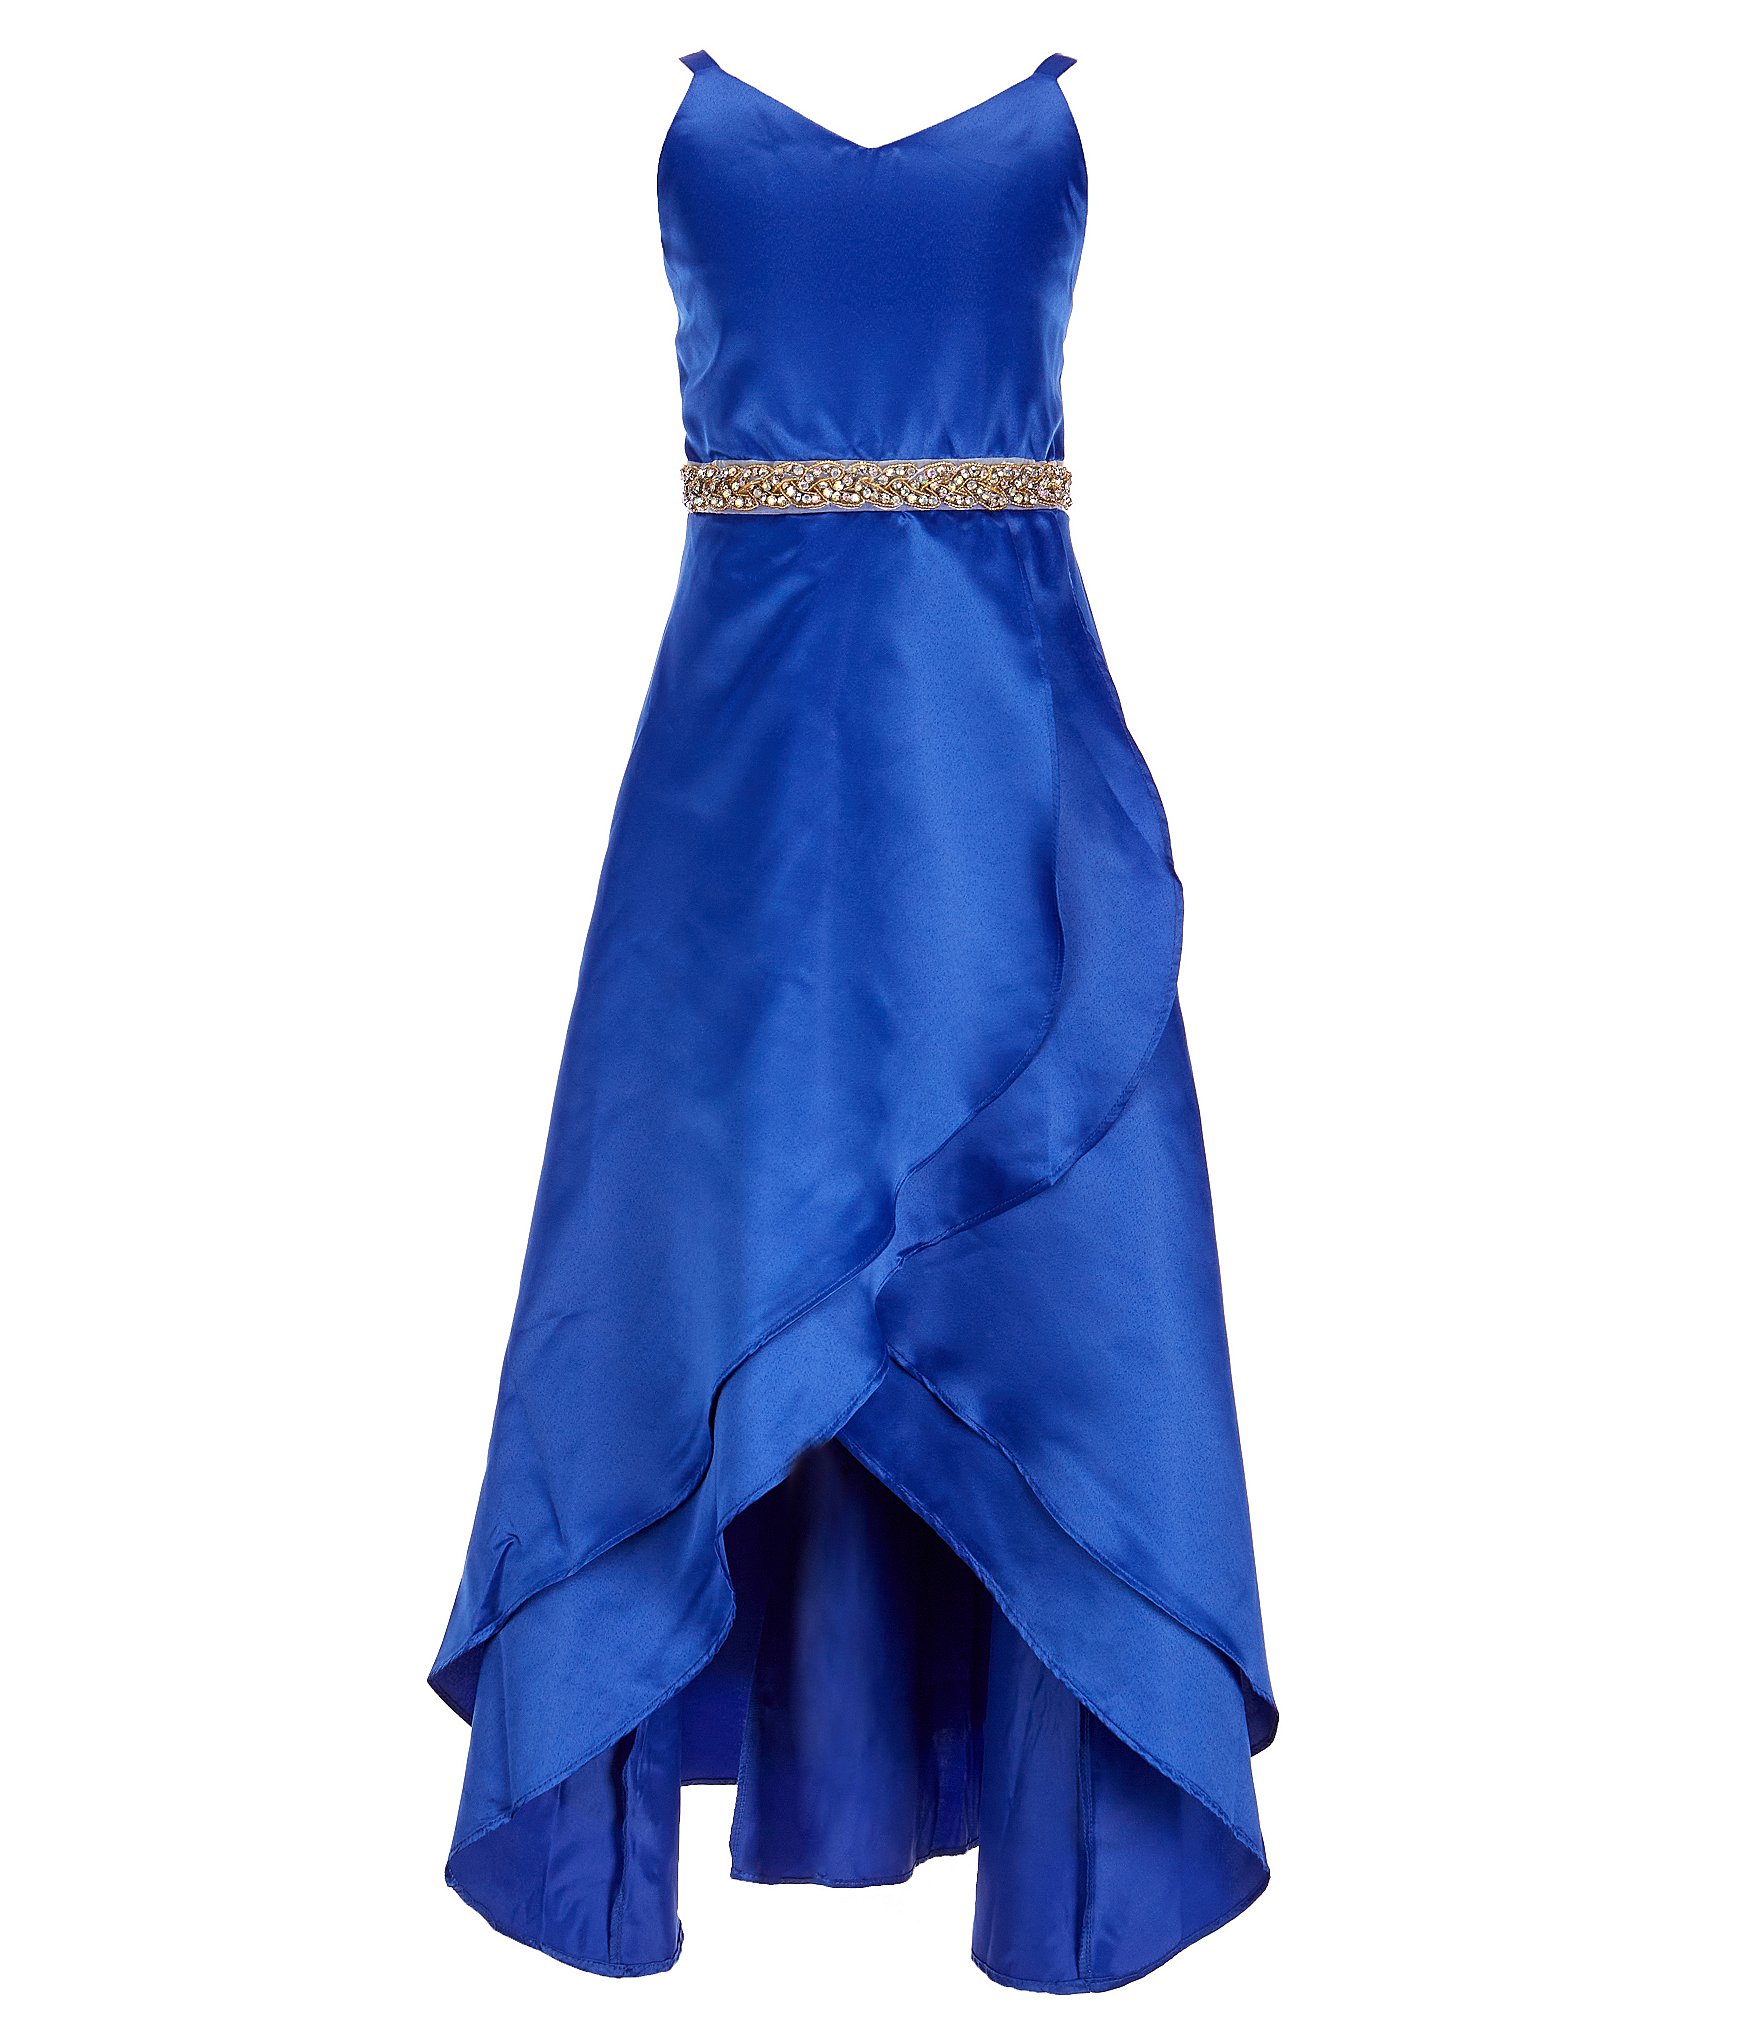 Girls' Size 16 Maxi Dresses for sale | eBay